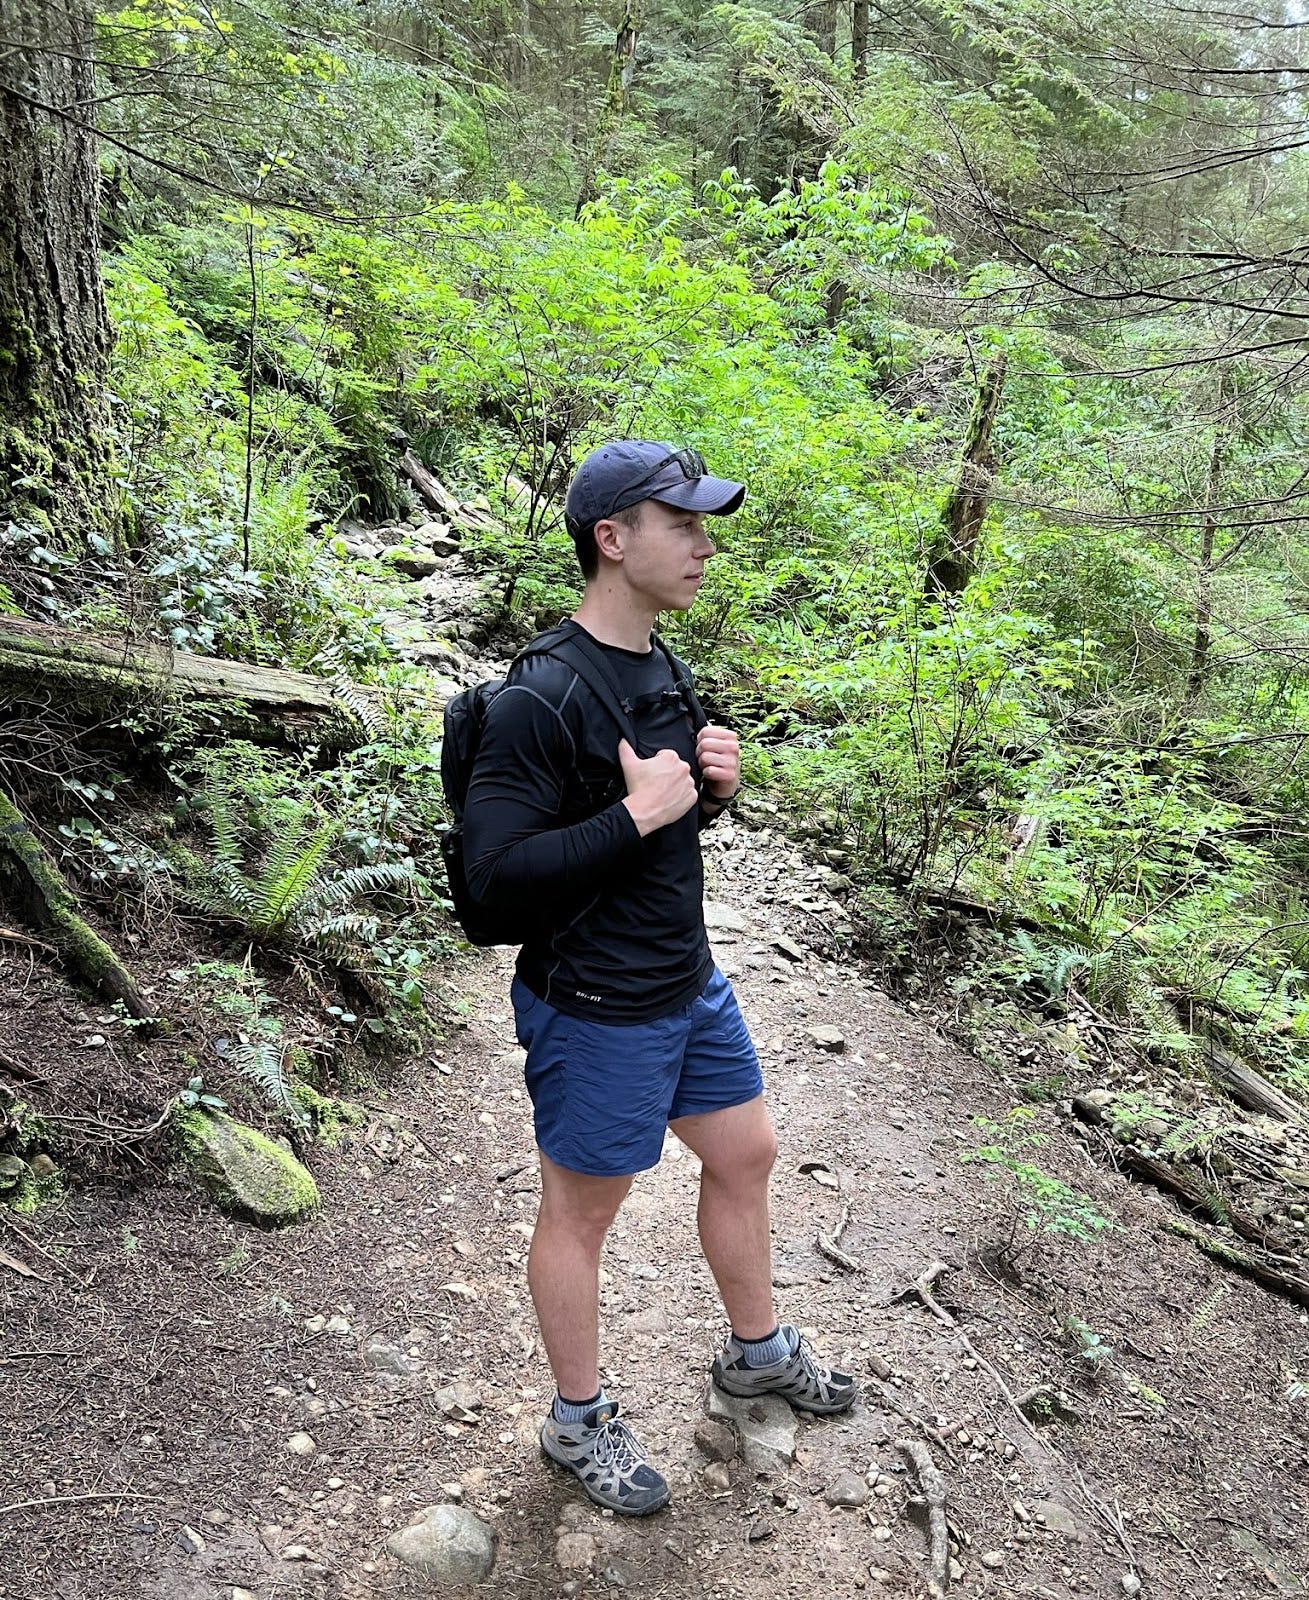 Hiking in beautiful British Columbia. June 2022.